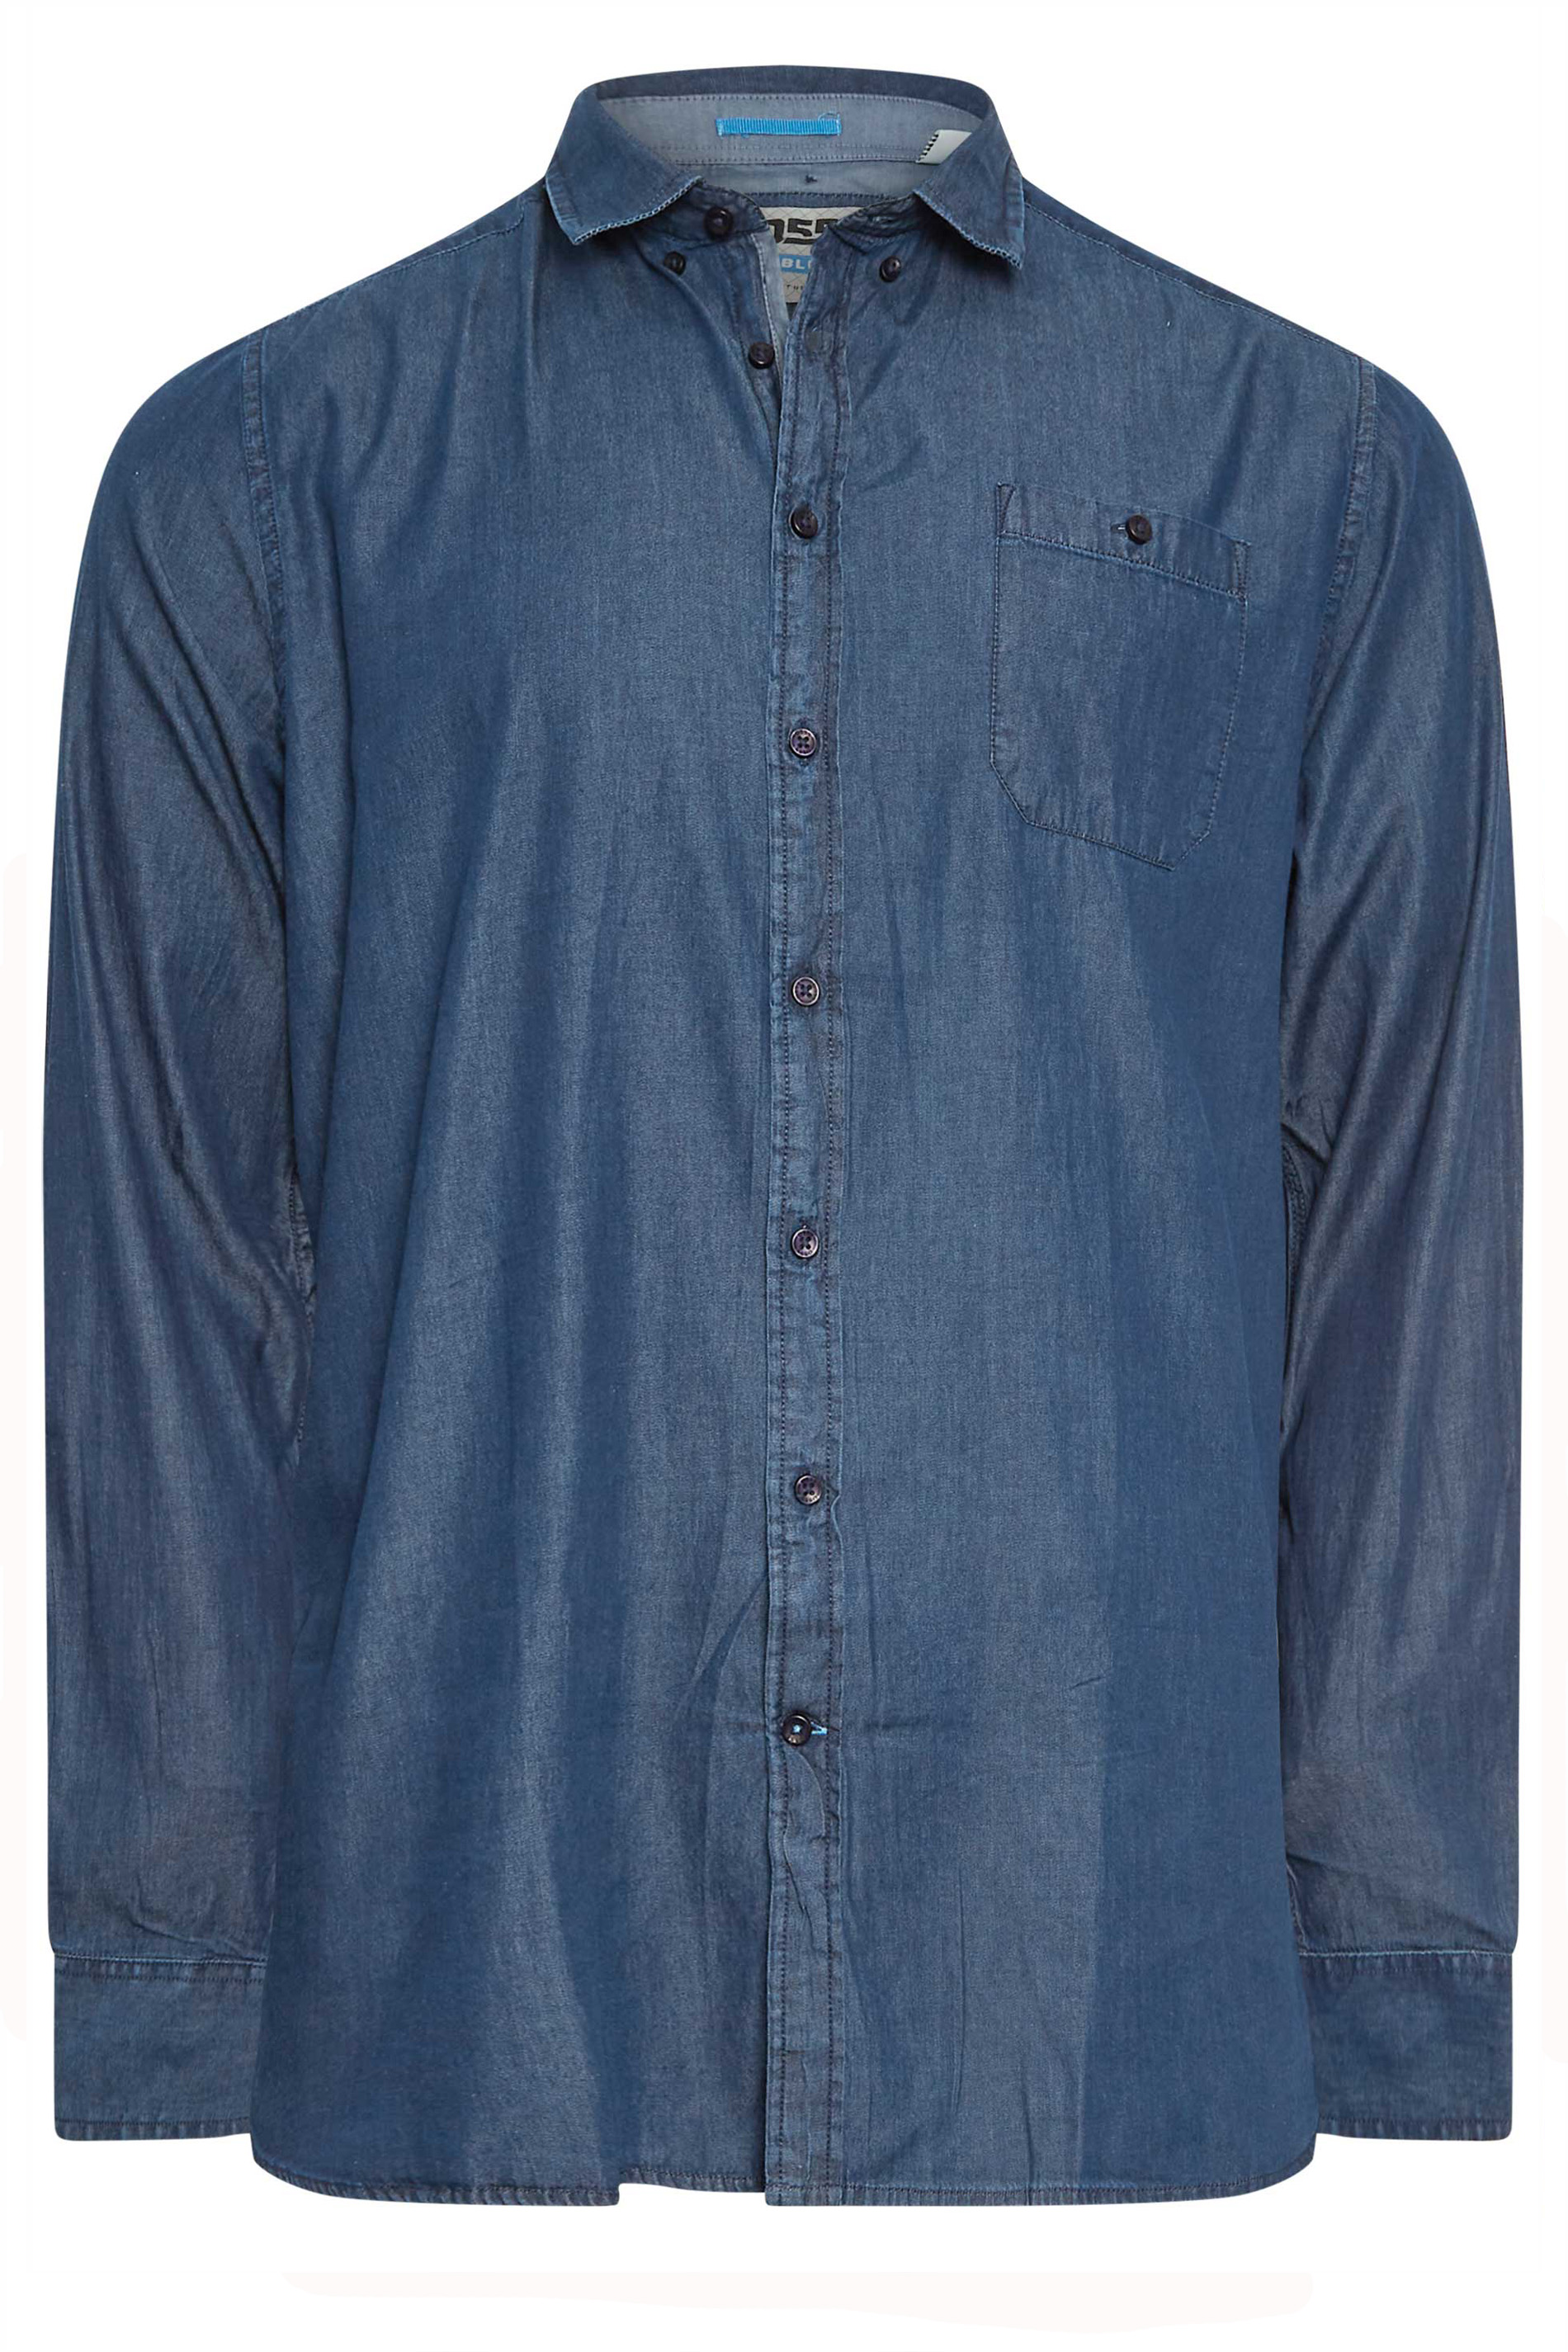 D555 Big & Tall Navy Blue Denim Shirt | BadRhino  2